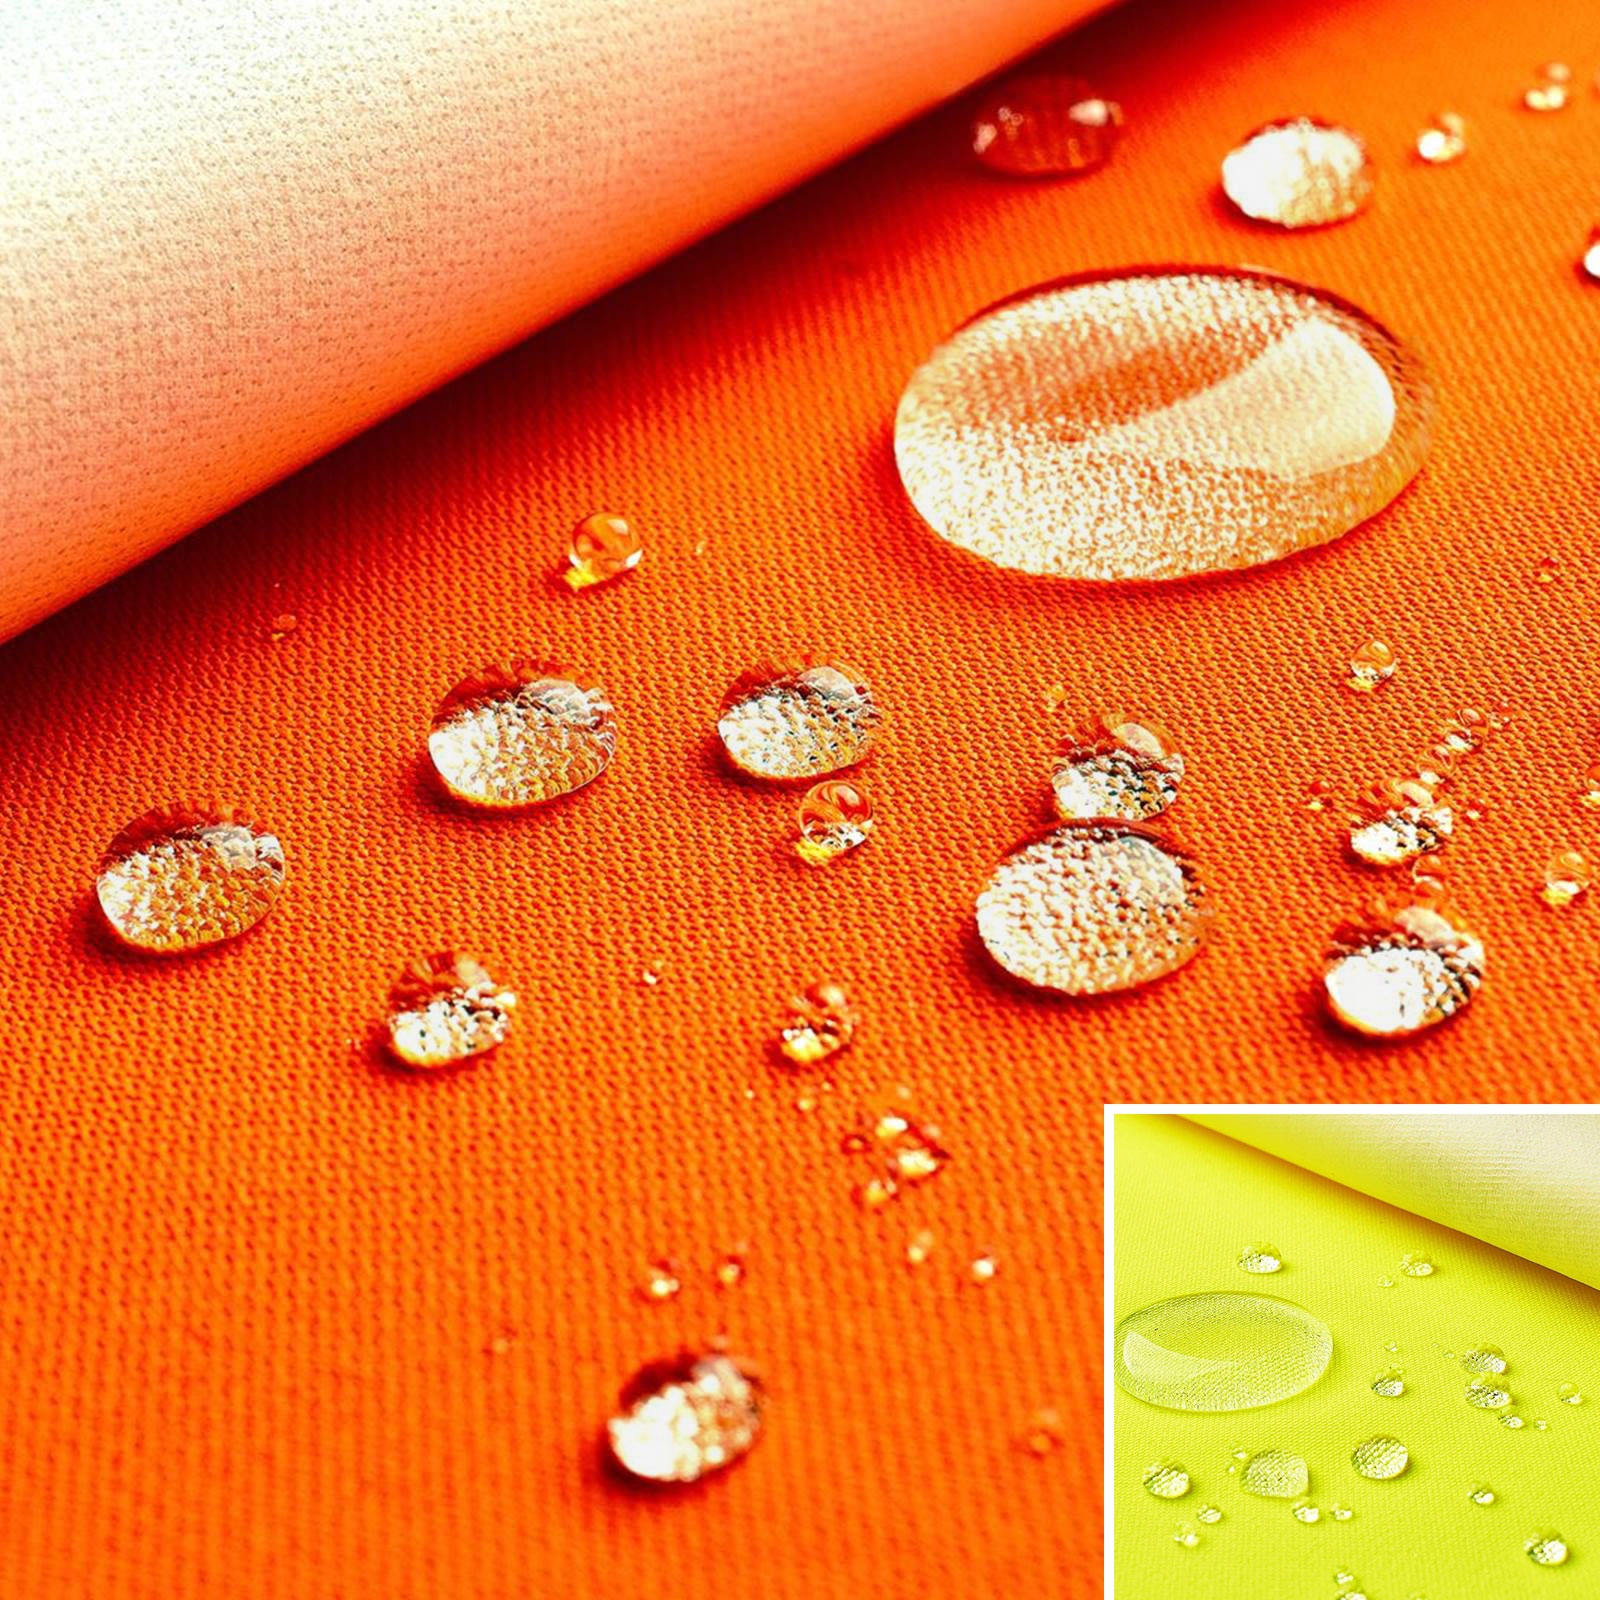 Greta - Outer fabric laminate windproof, waterproof, breathable - neon EN 20471